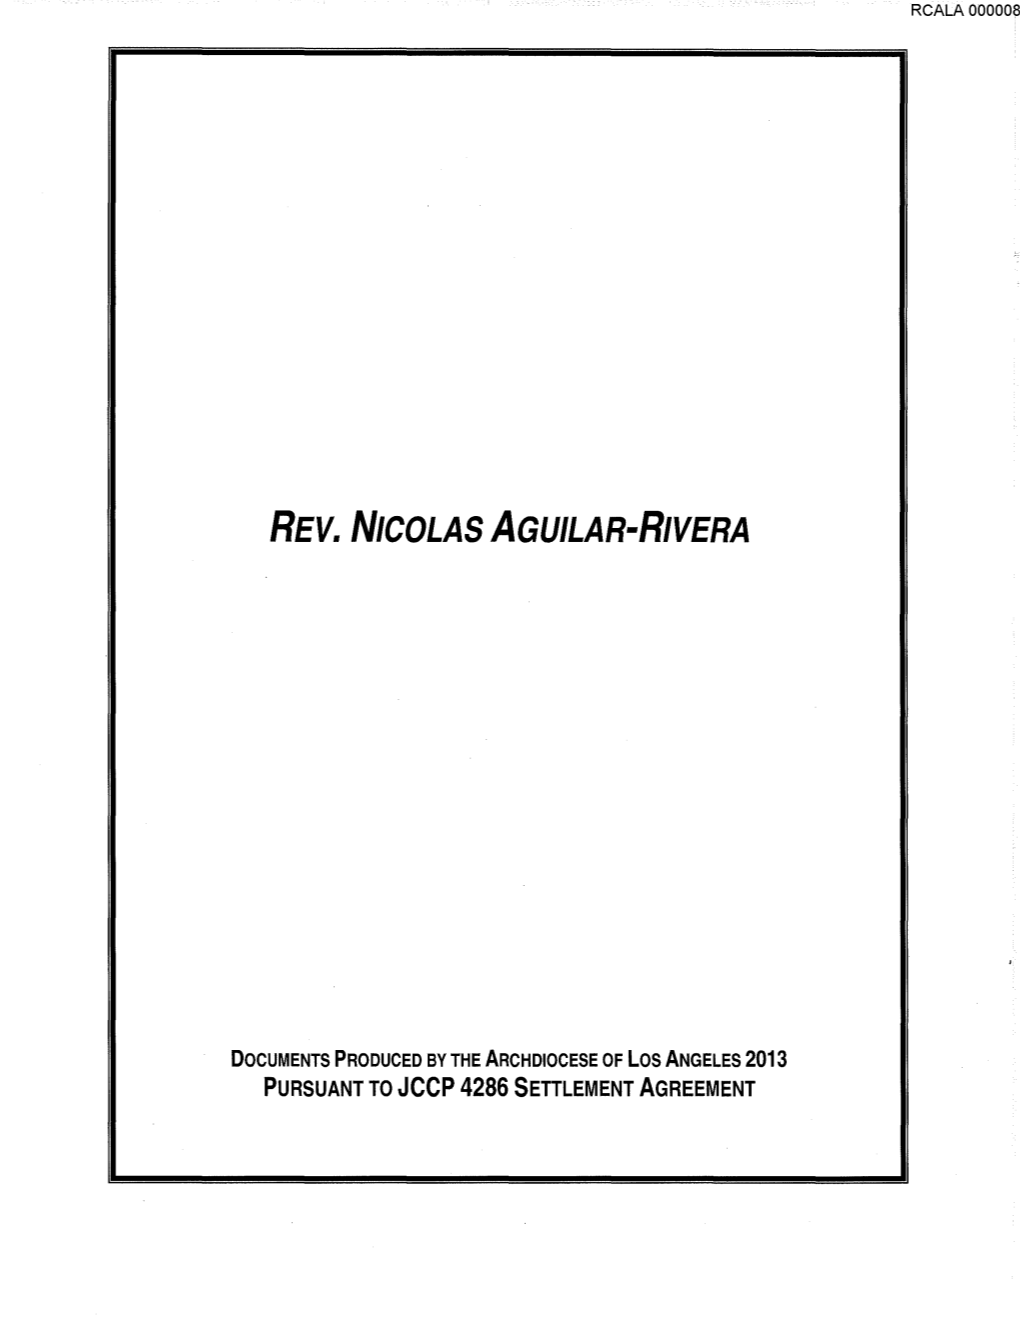 Rev. Nicolas Aguilar-Rivera